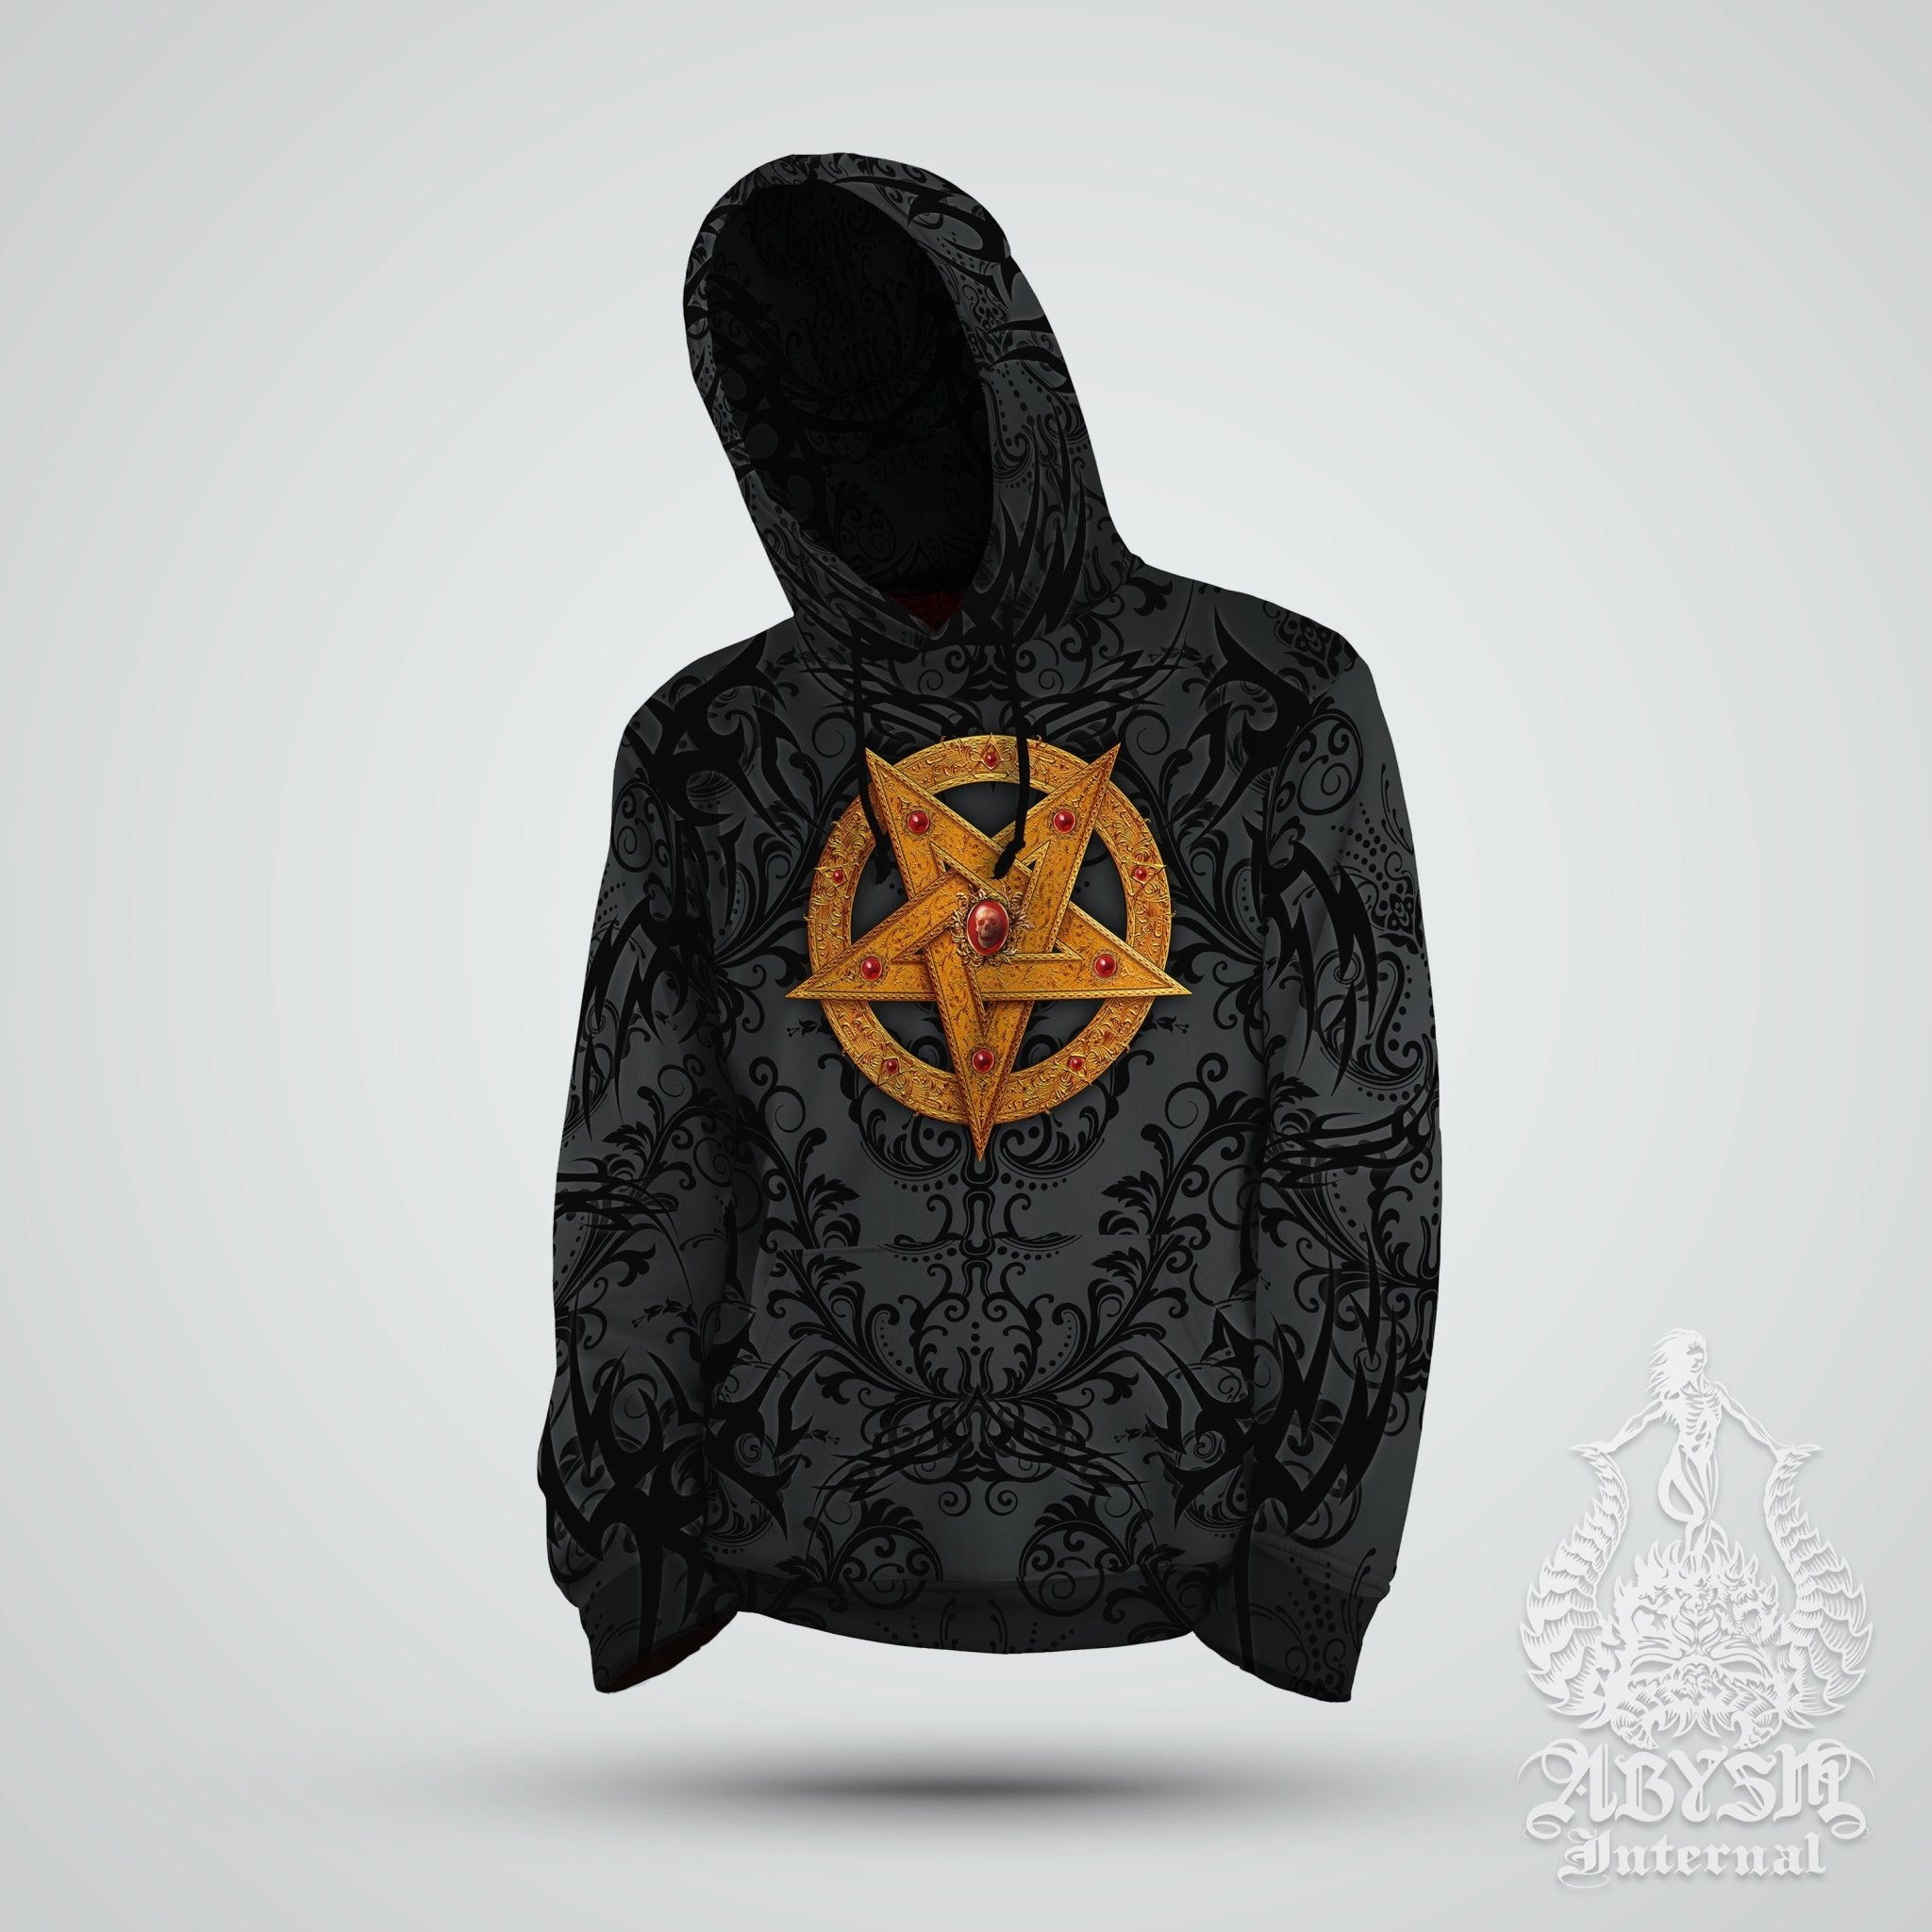 Pentagram Hoodie, Black Metal Streetwear, Street Outfit, Gothic Sweater, Satanic Goth, Alternative Clothing, Unisex - Gold Black - Abysm Internal